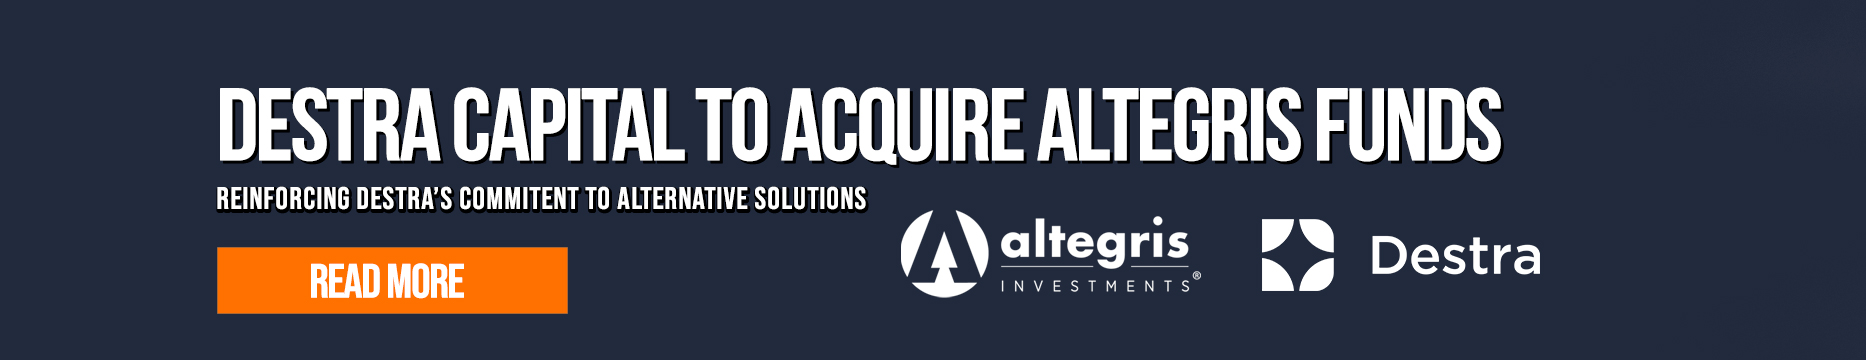 Altegris-Acquisition-Promo.jpg